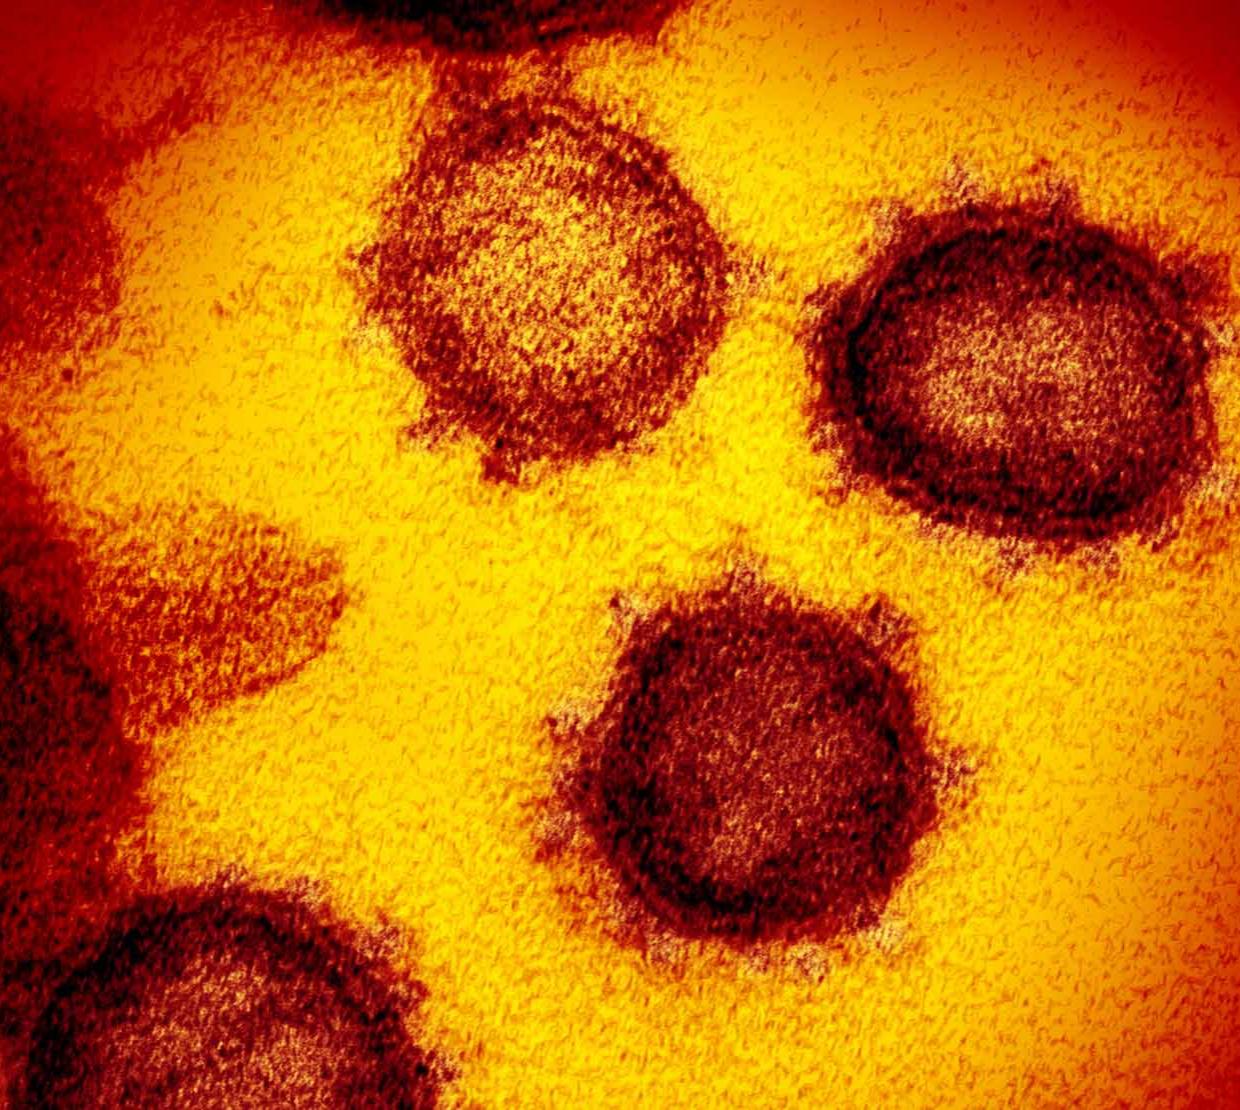 Microscopic image of coronavirus cells